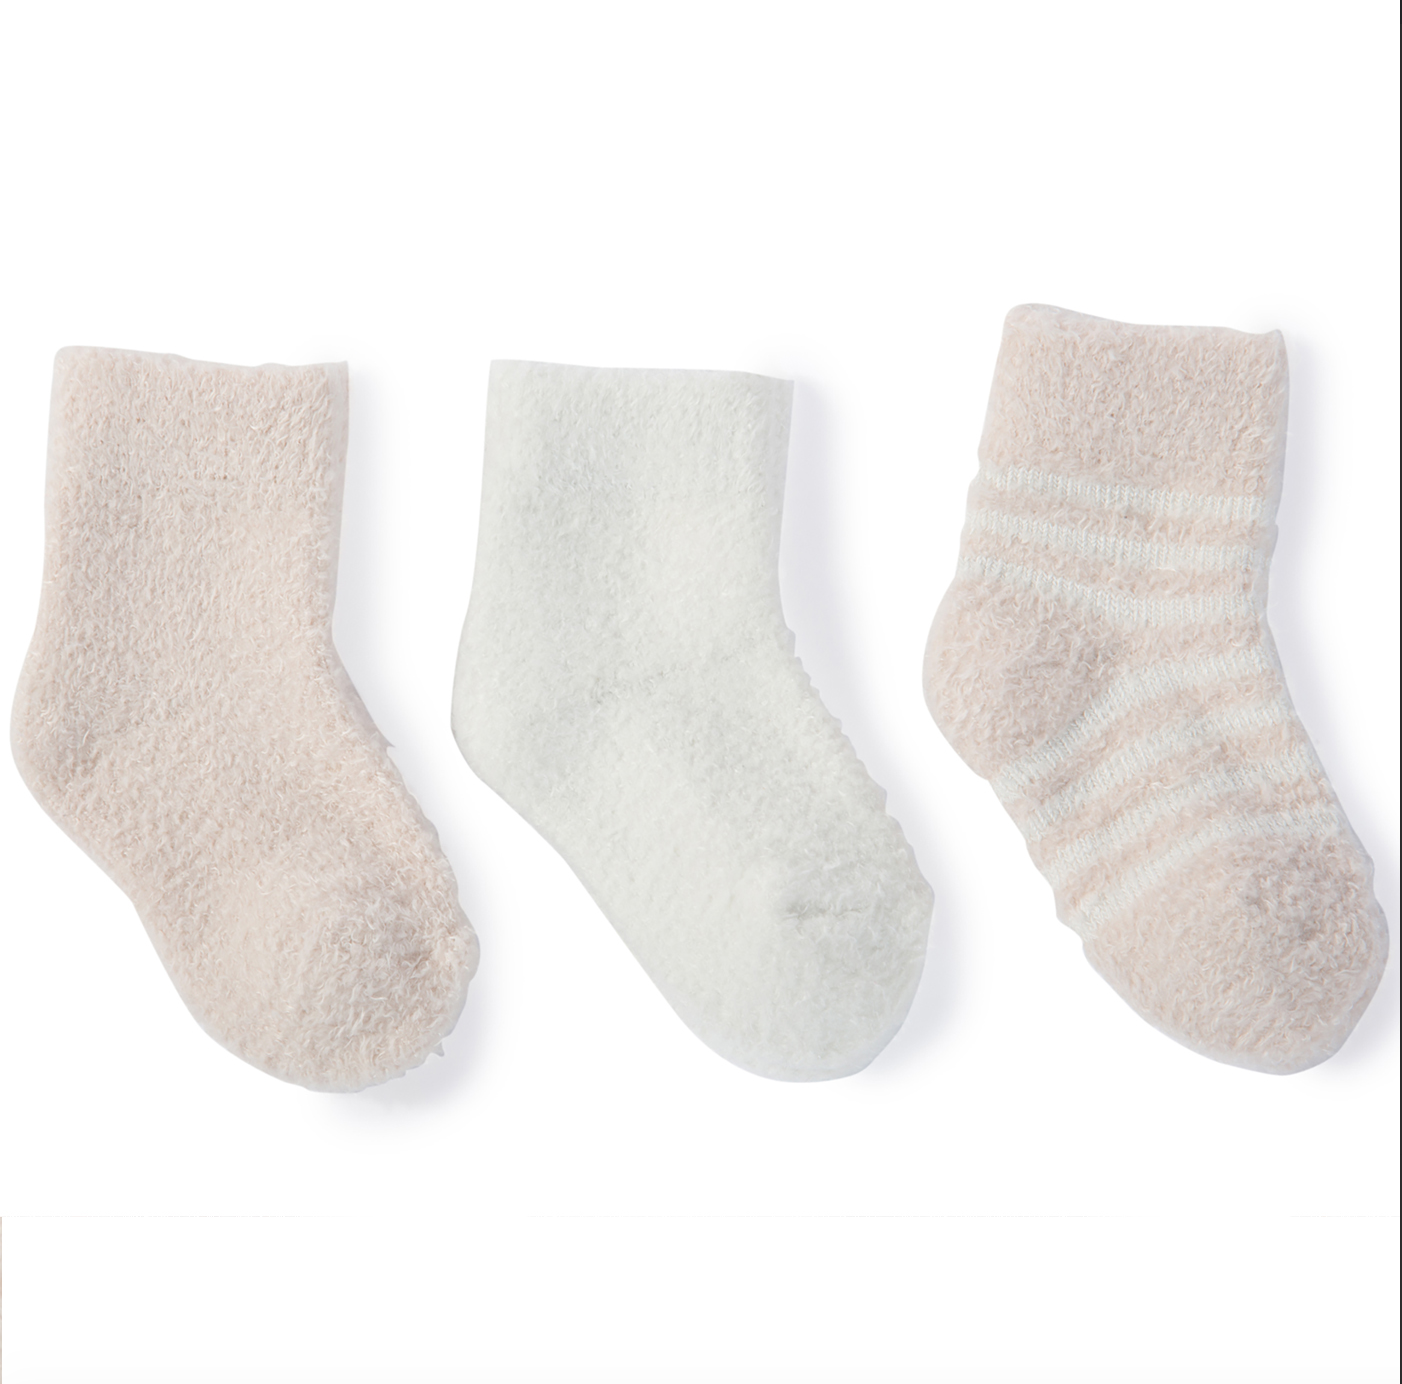 CozyChic Lite Infant Socks-Set of 3